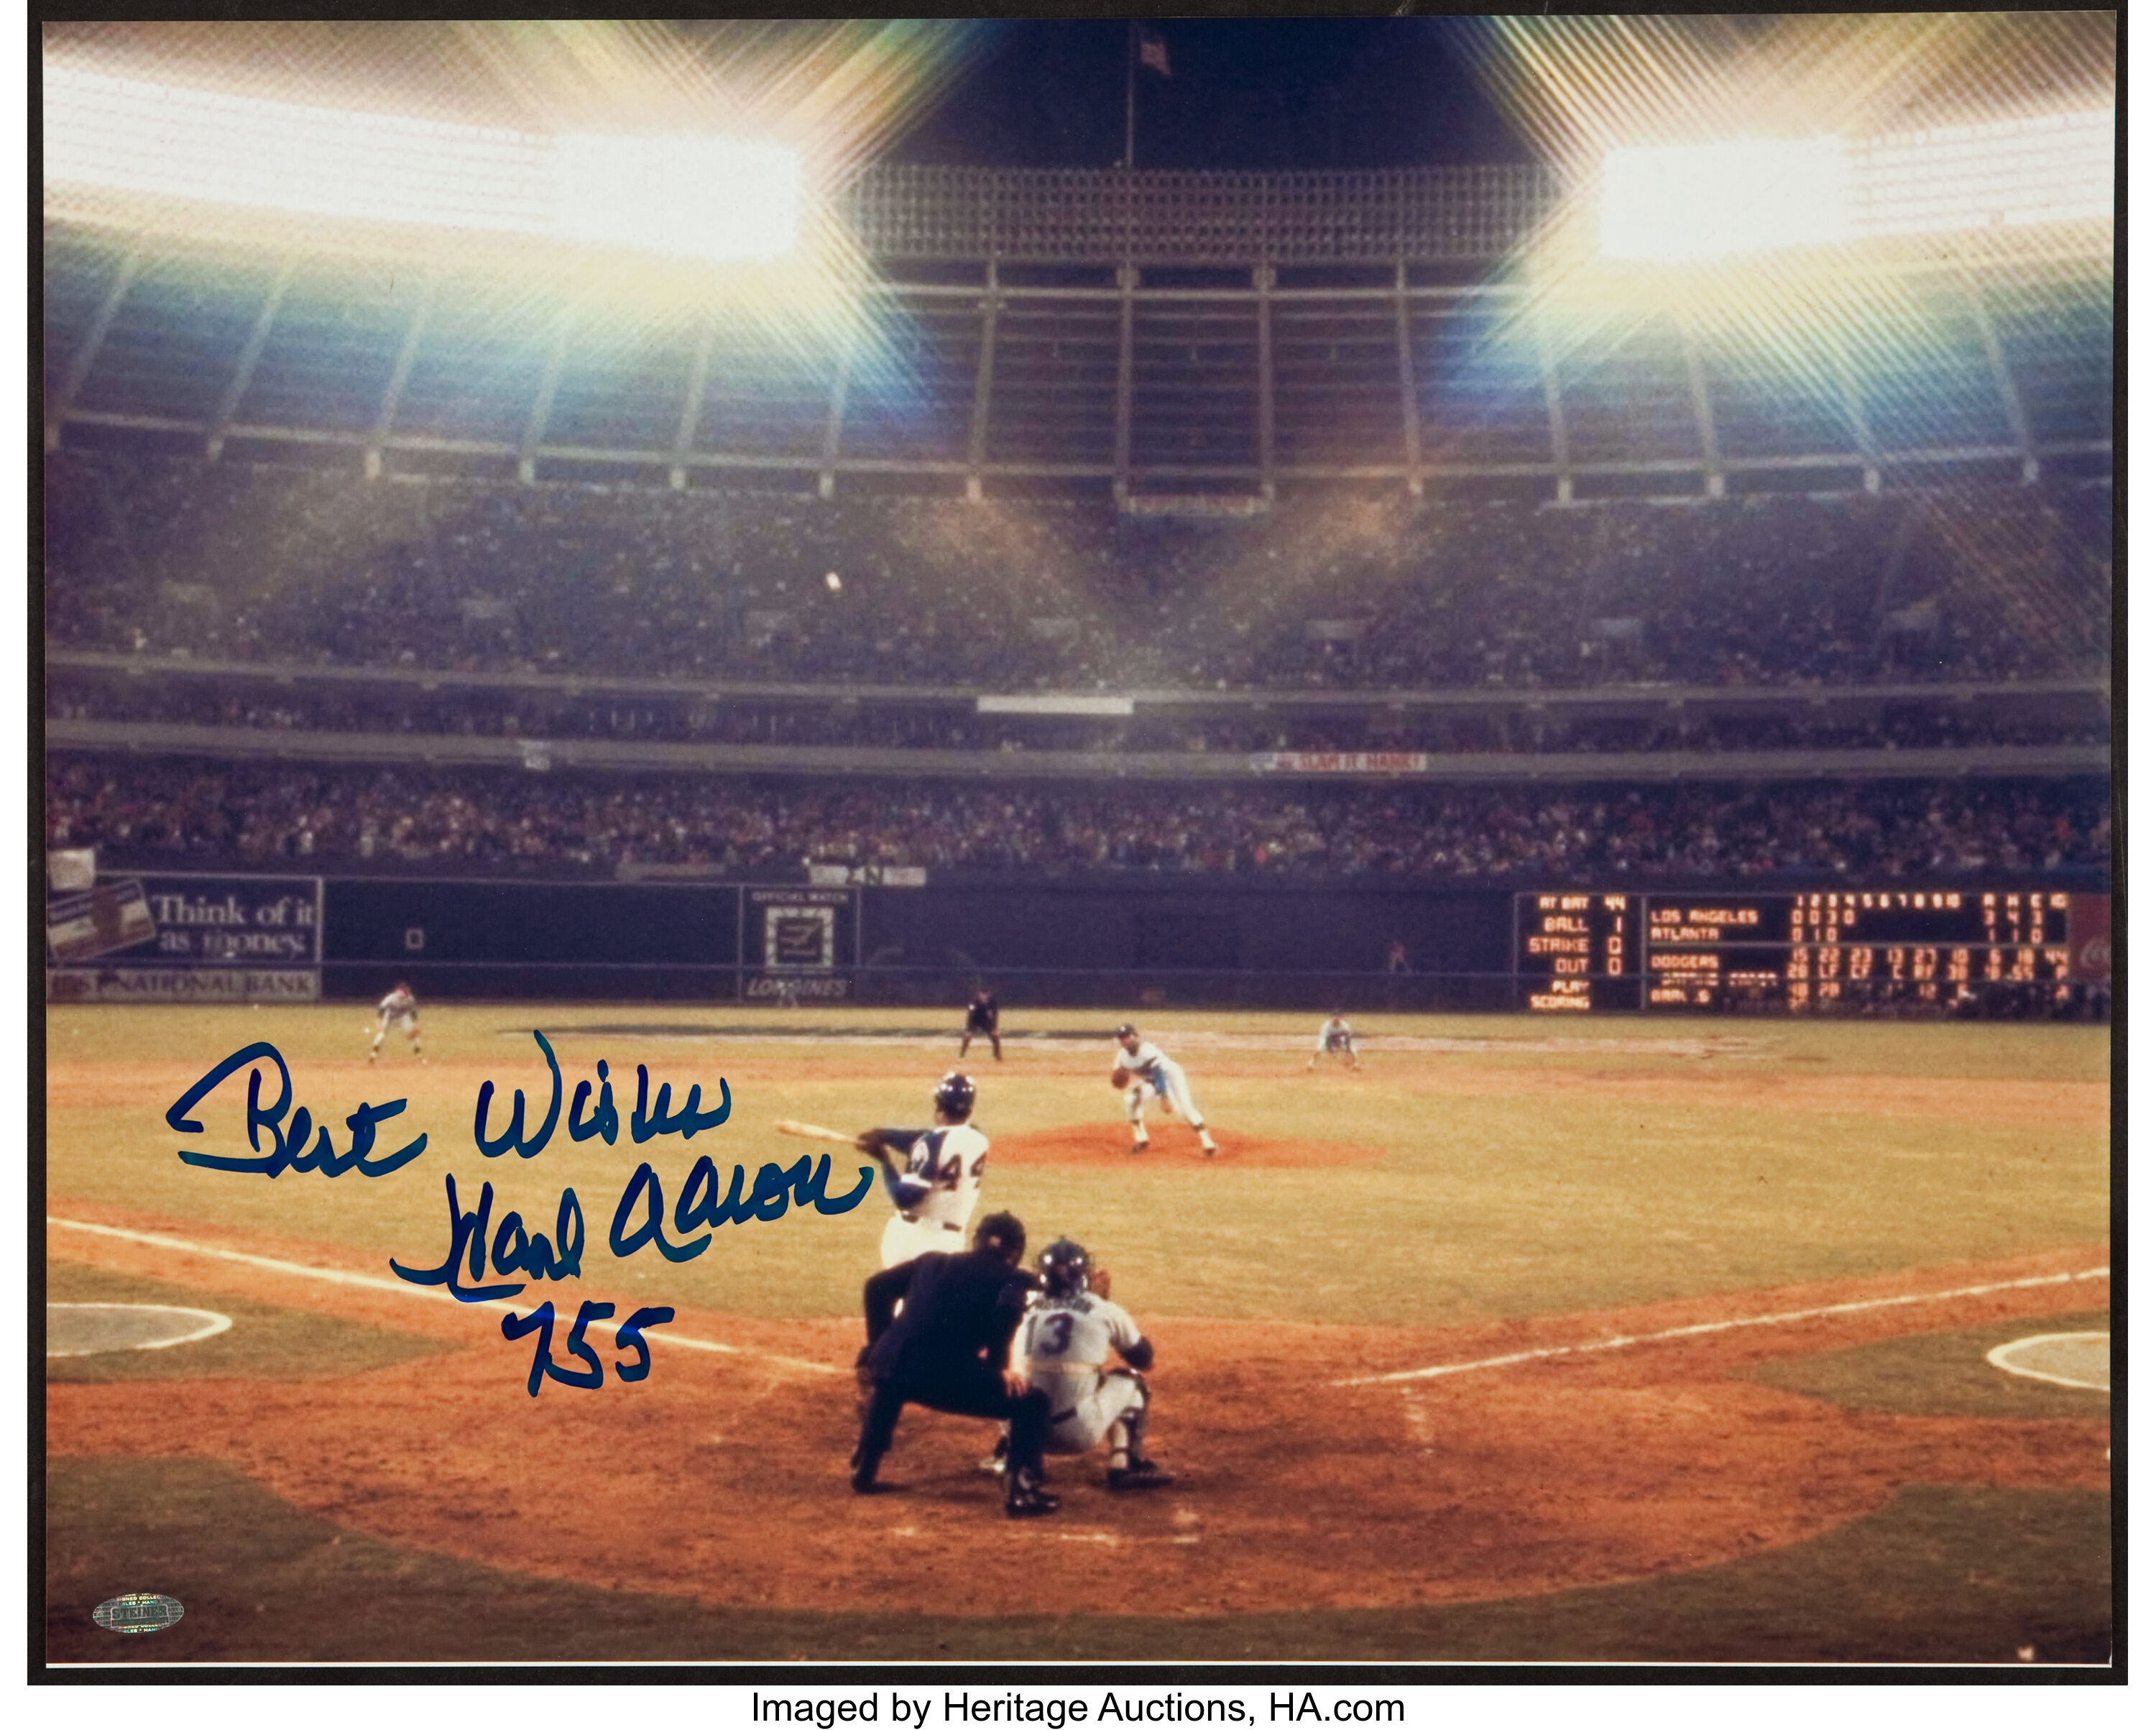 Hank Aaron 755 Signed Oversized Photograph. Baseball